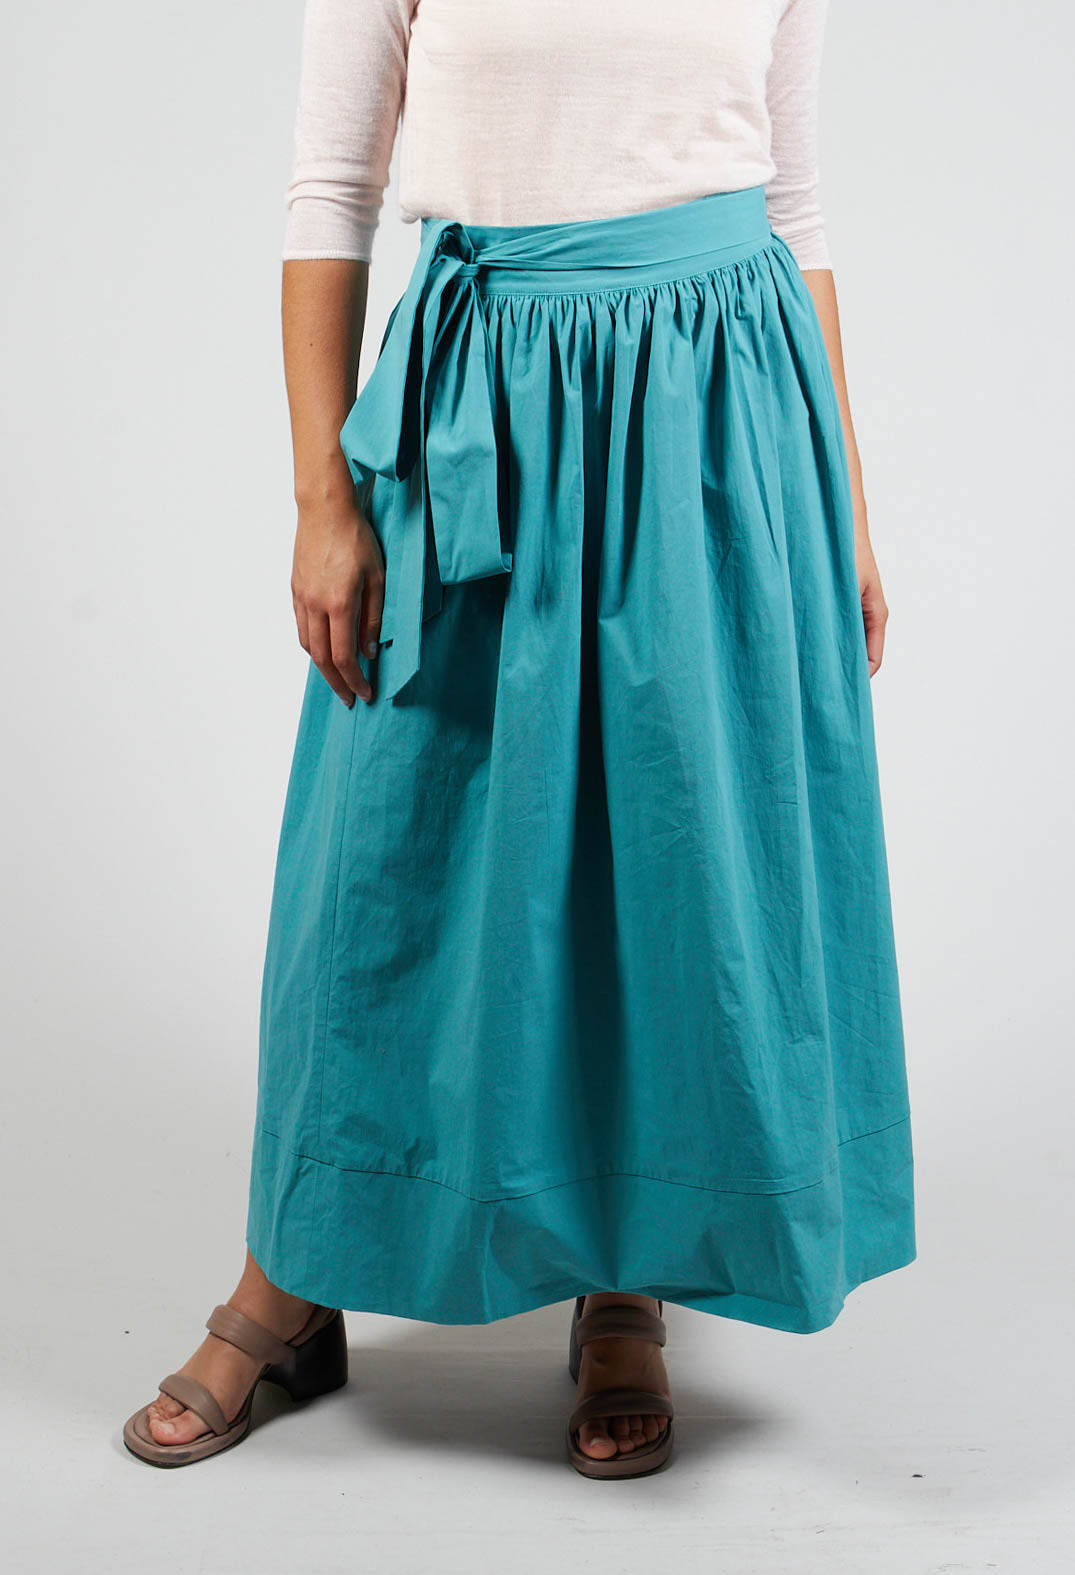 Sash Skirt in Turquoise